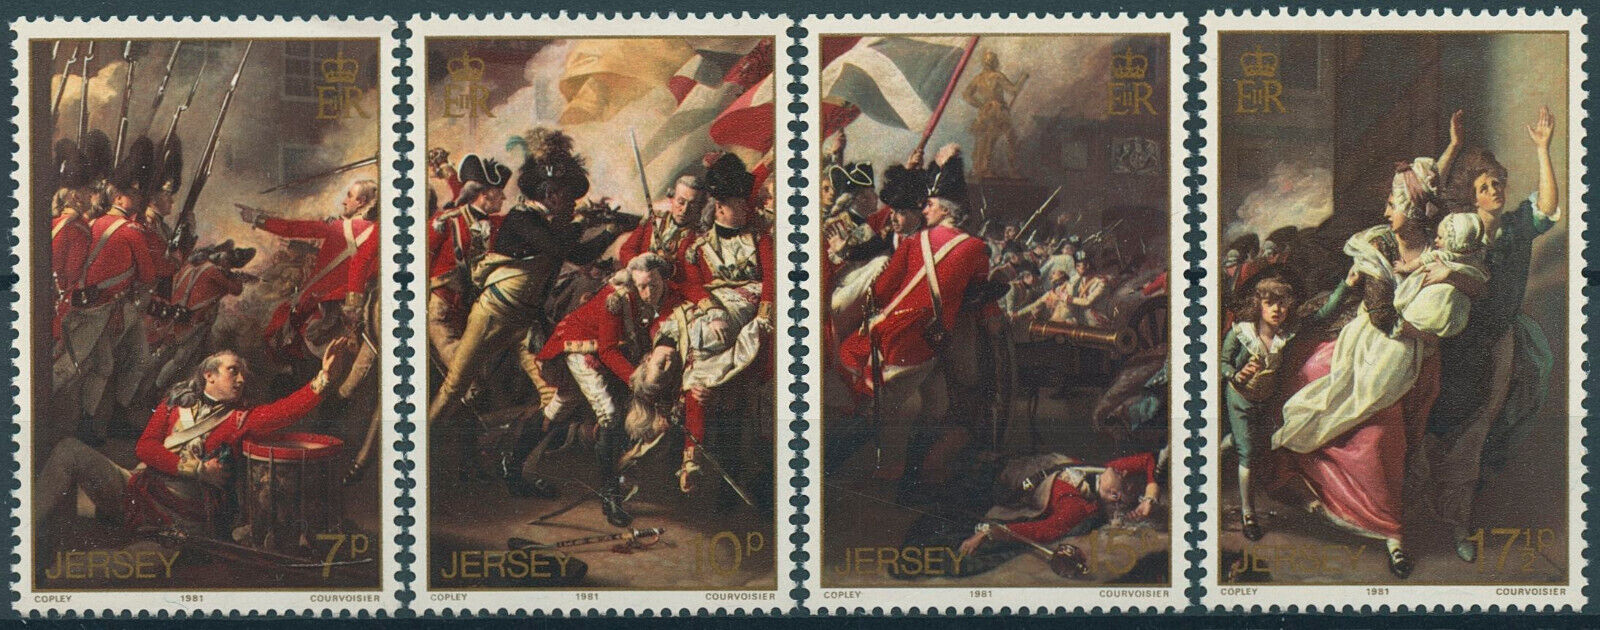 Jersey 1981 MNH Art Stamps Battle of Jersey Death of Major Peirson Copley 4v Set